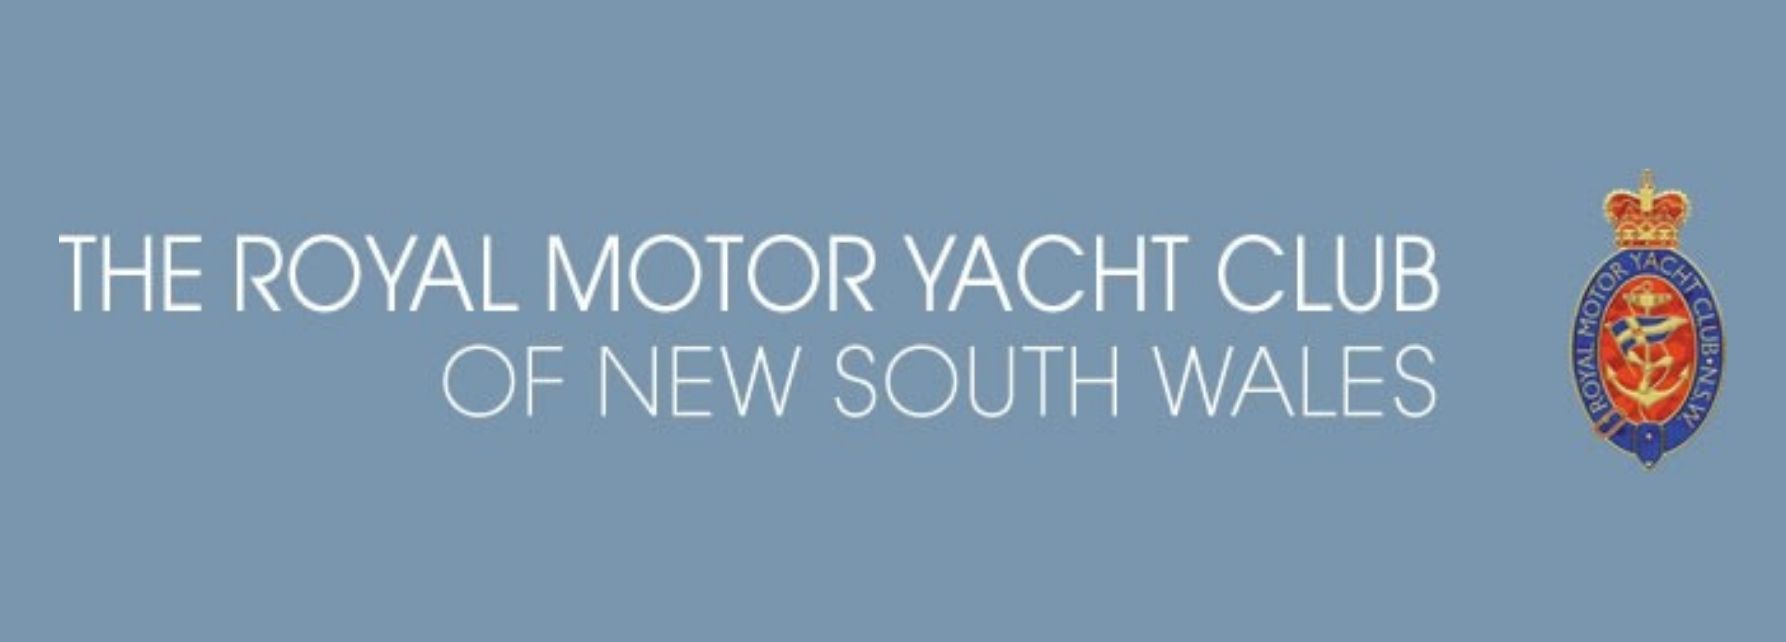 royal motor yacht club logo